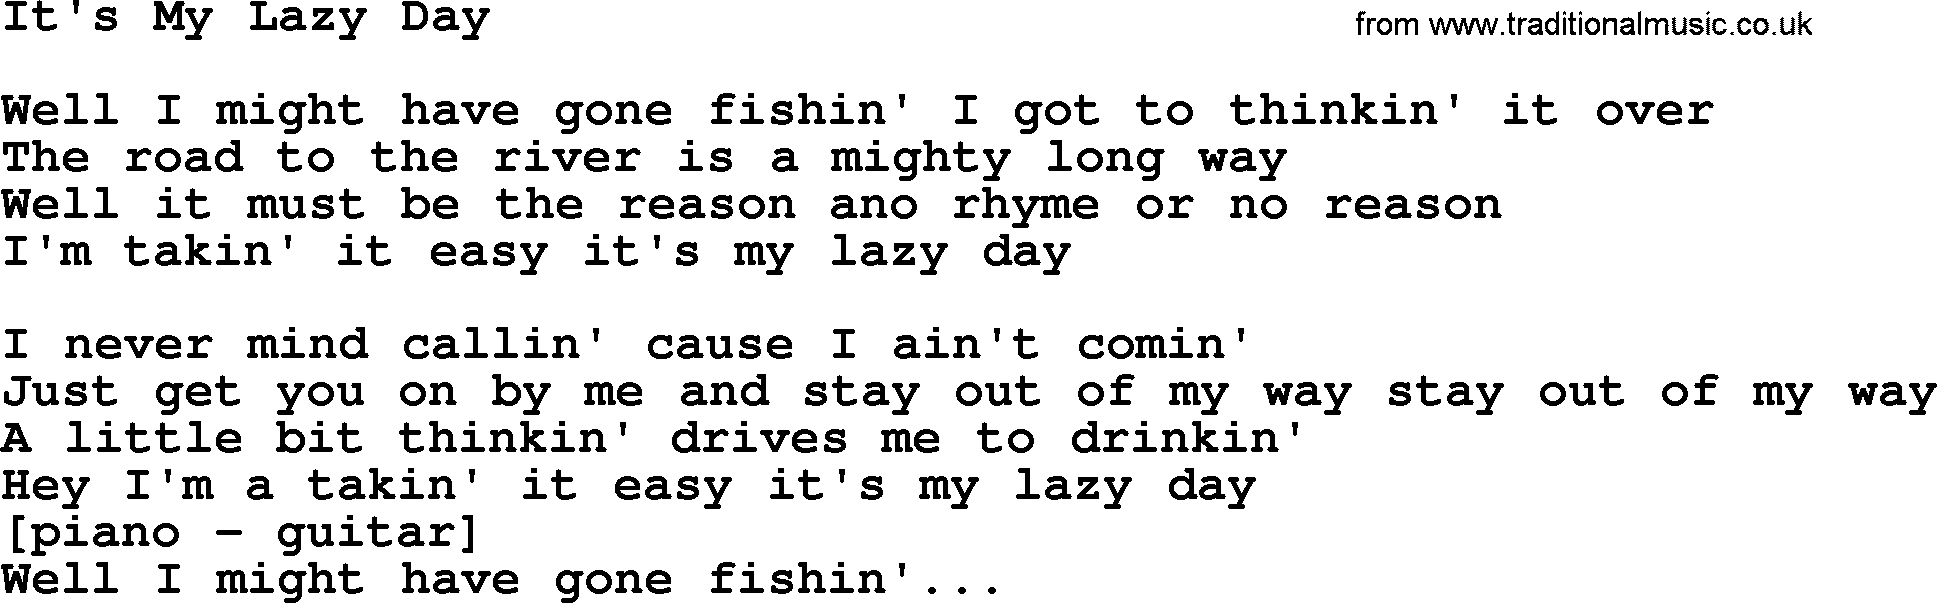 Willie Nelson song: It's My Lazy Day lyrics